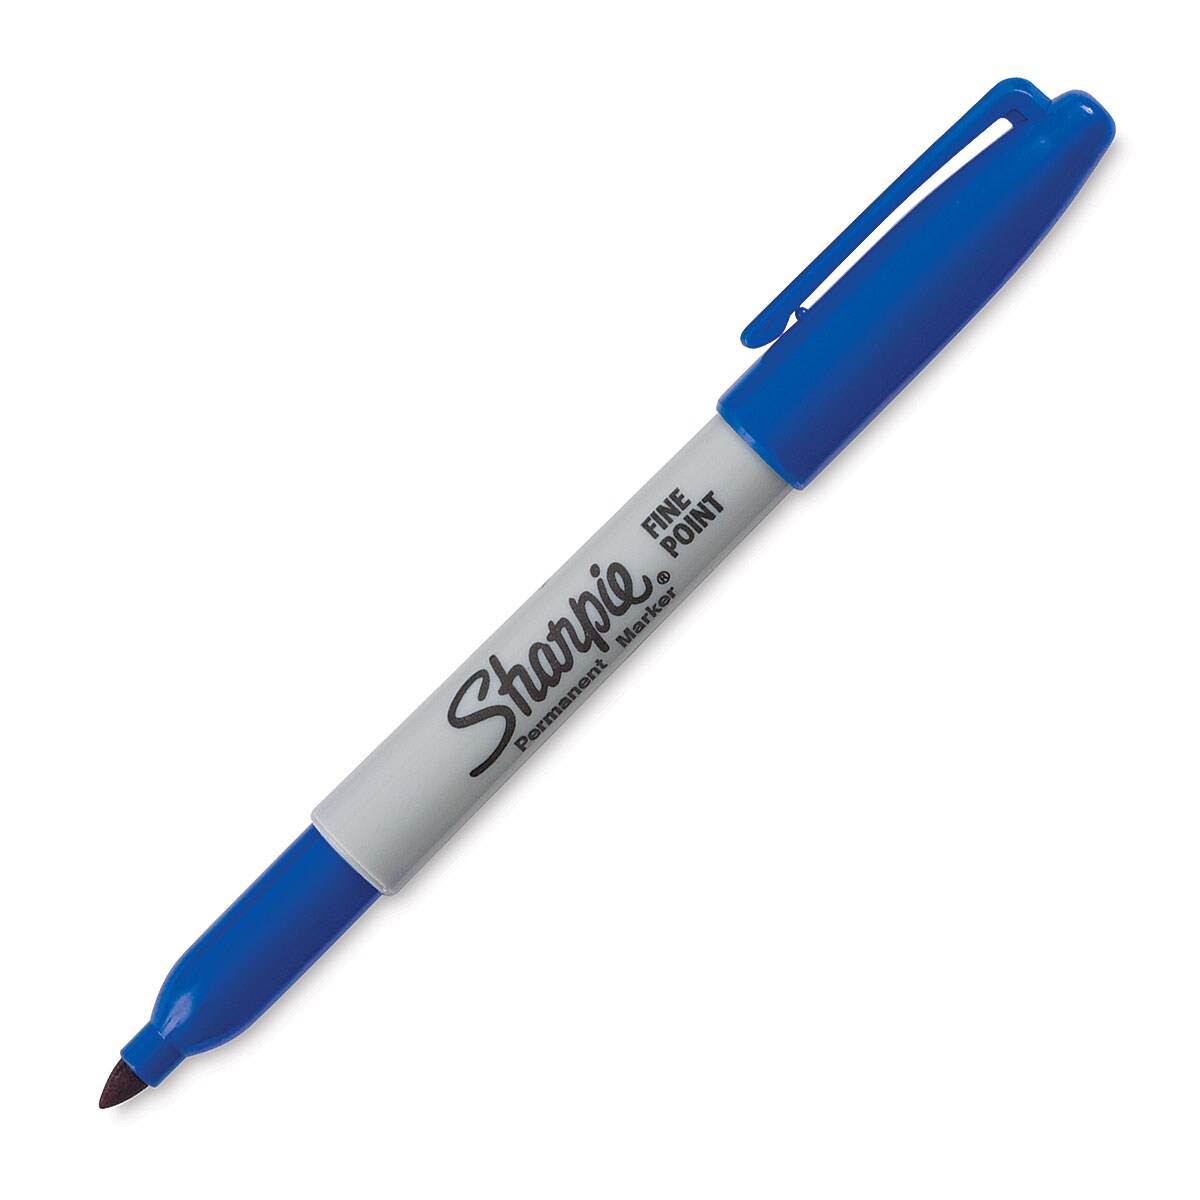 Sharpie Pen Blue Fine, Non Bleeding, Archival-quality